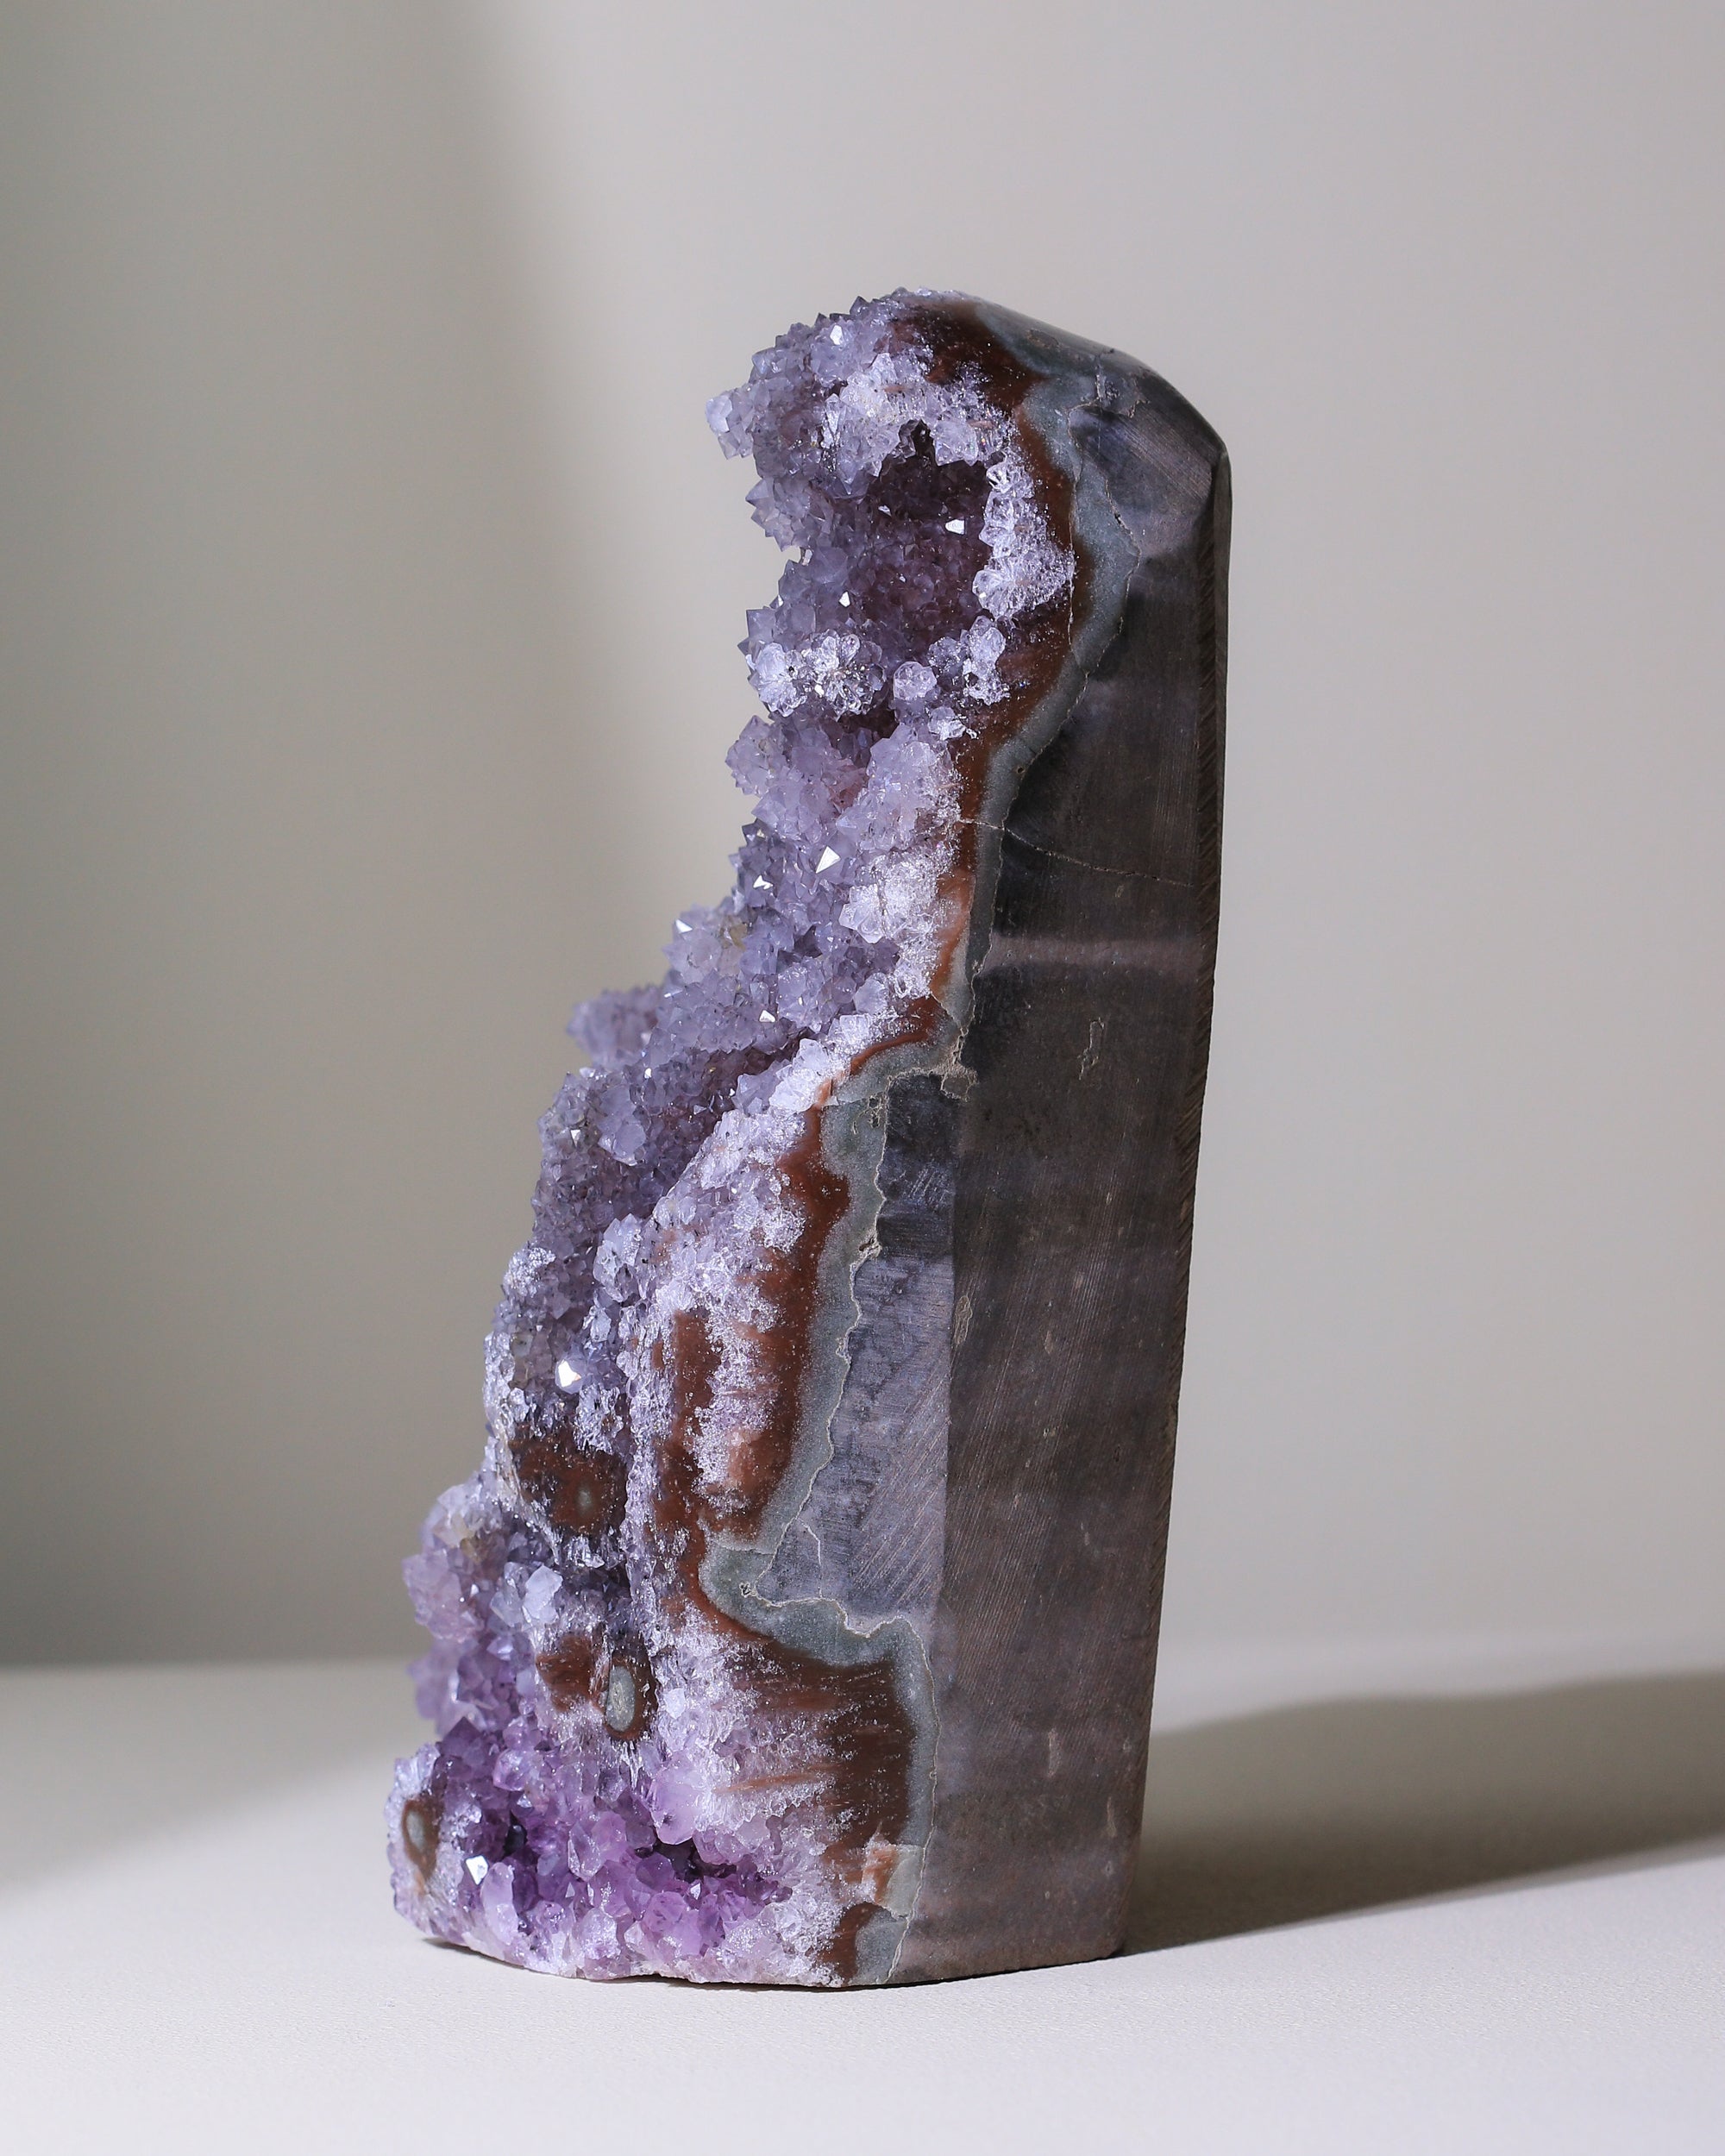 großer "Galaxy" Amethyst Kristall, Einzelstück